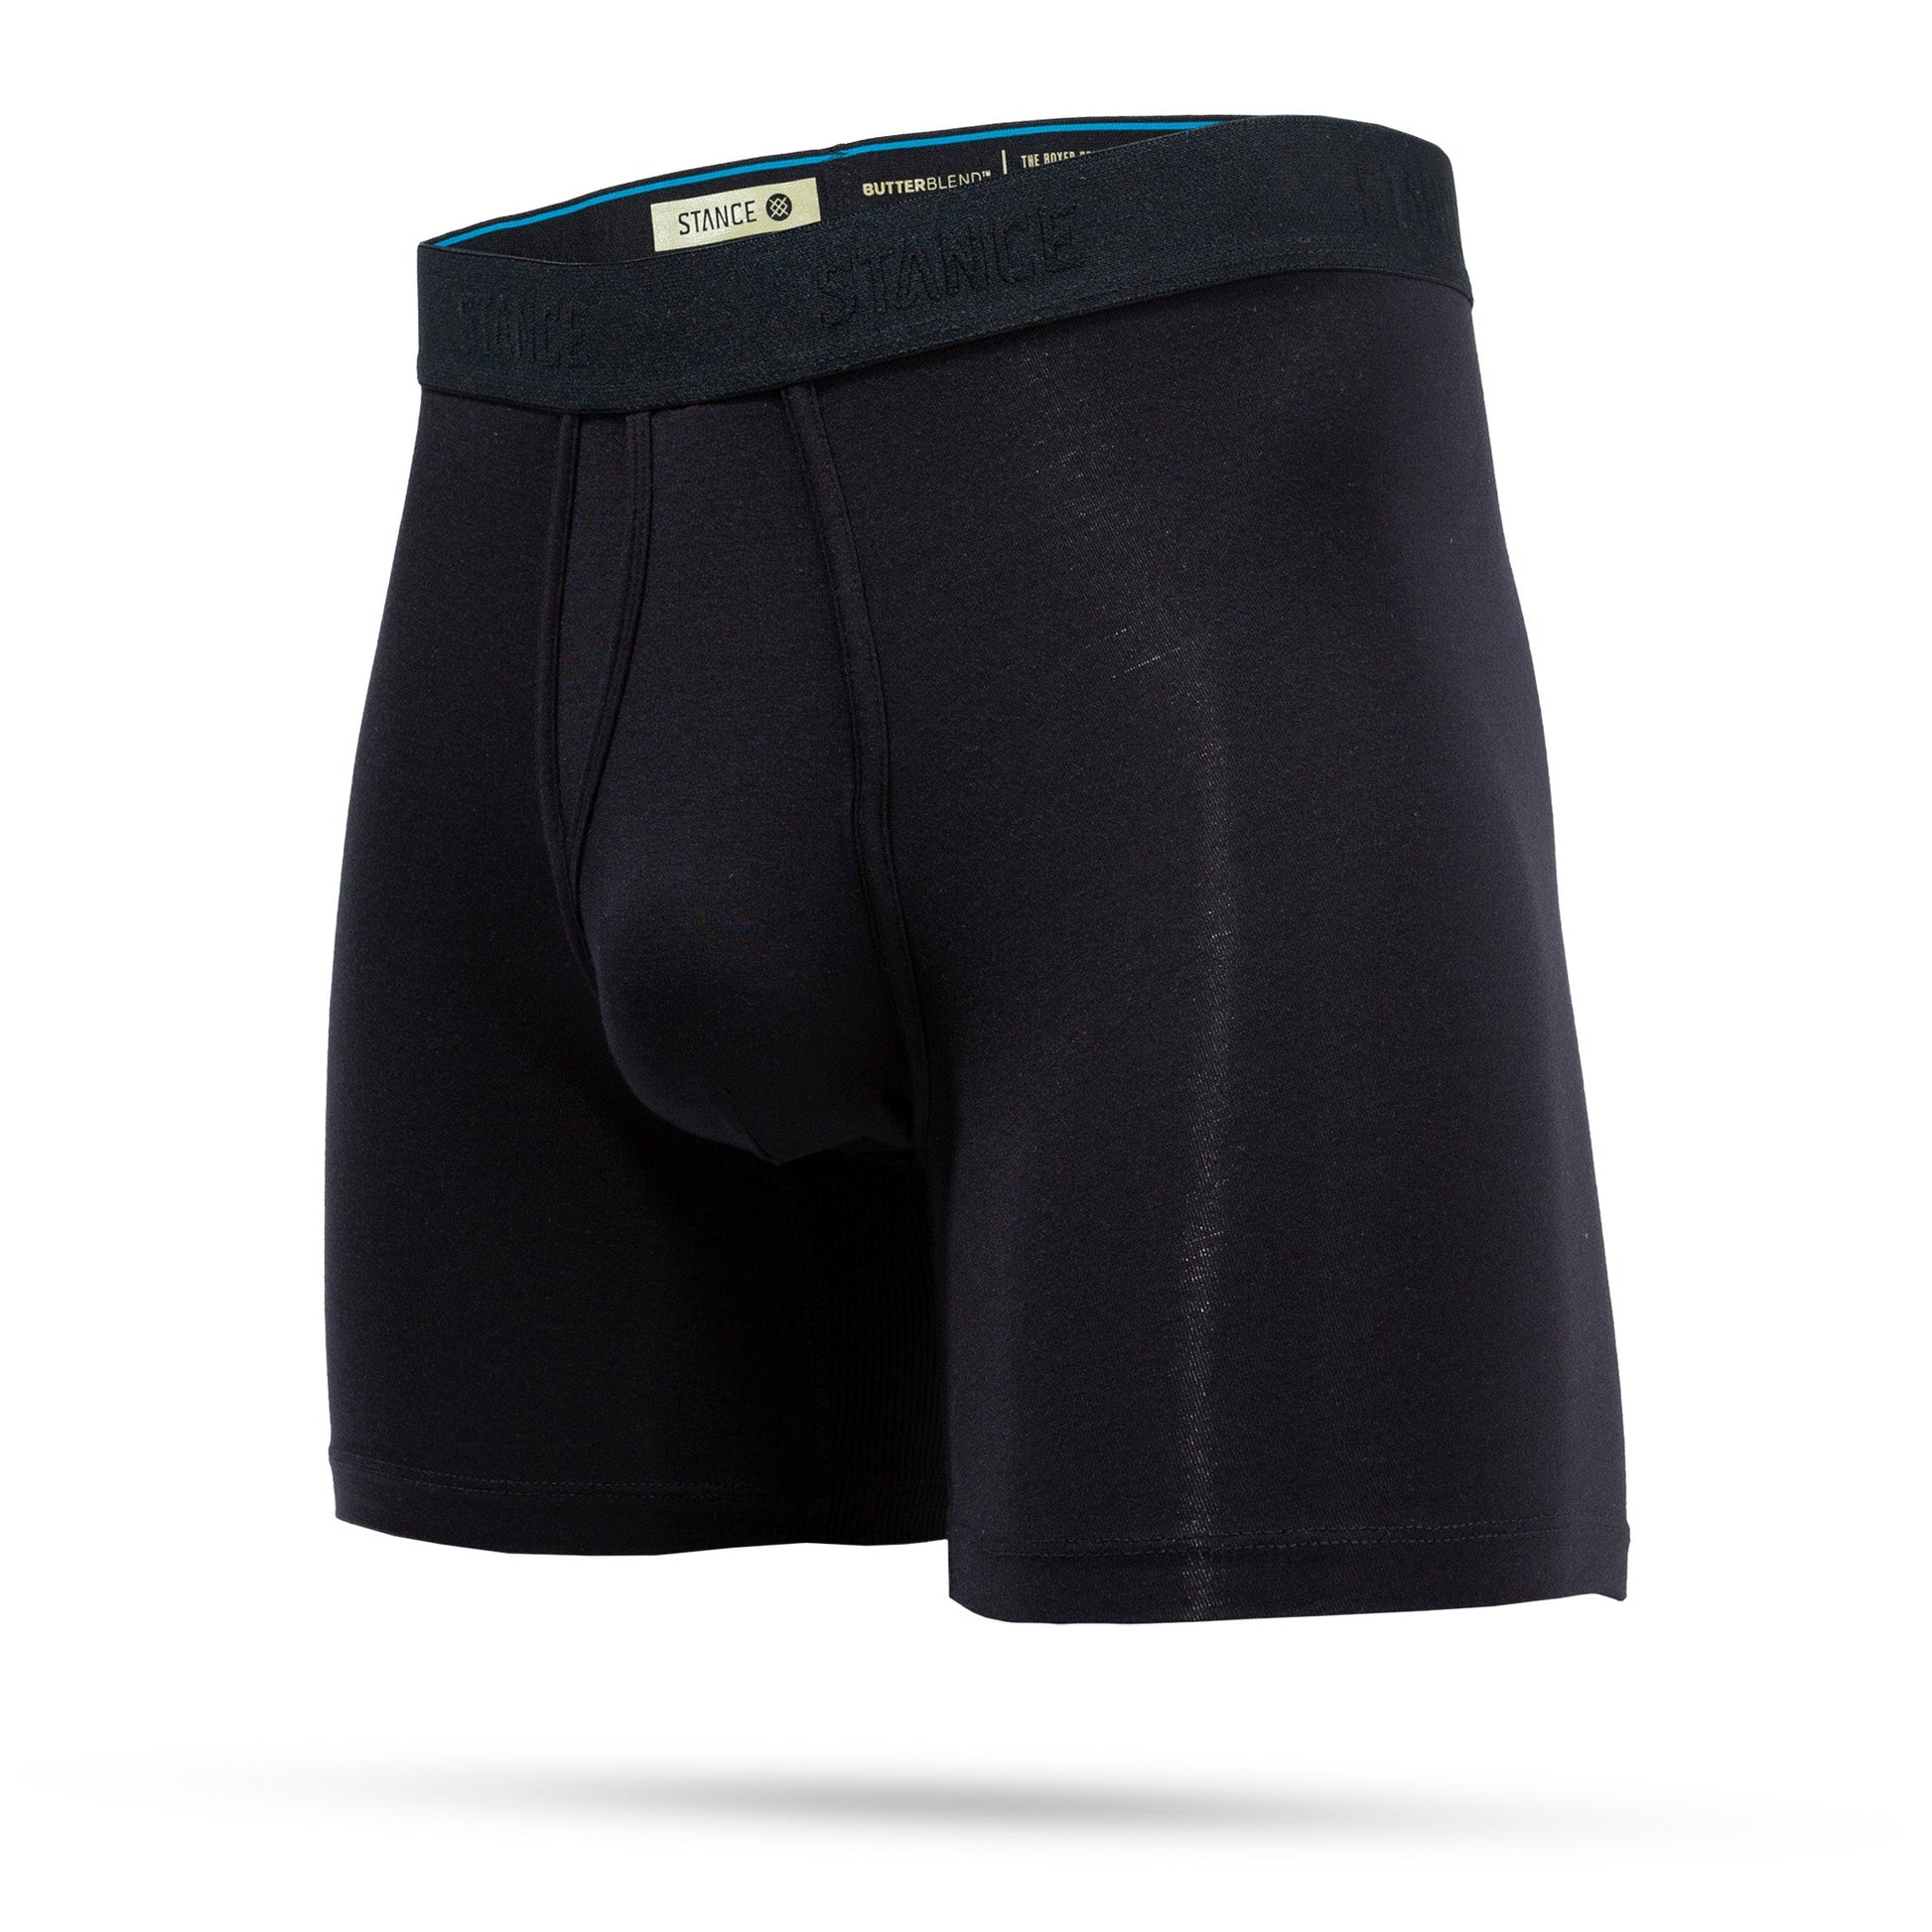 Pure Boxer Brief Wholester, Men's Underwear